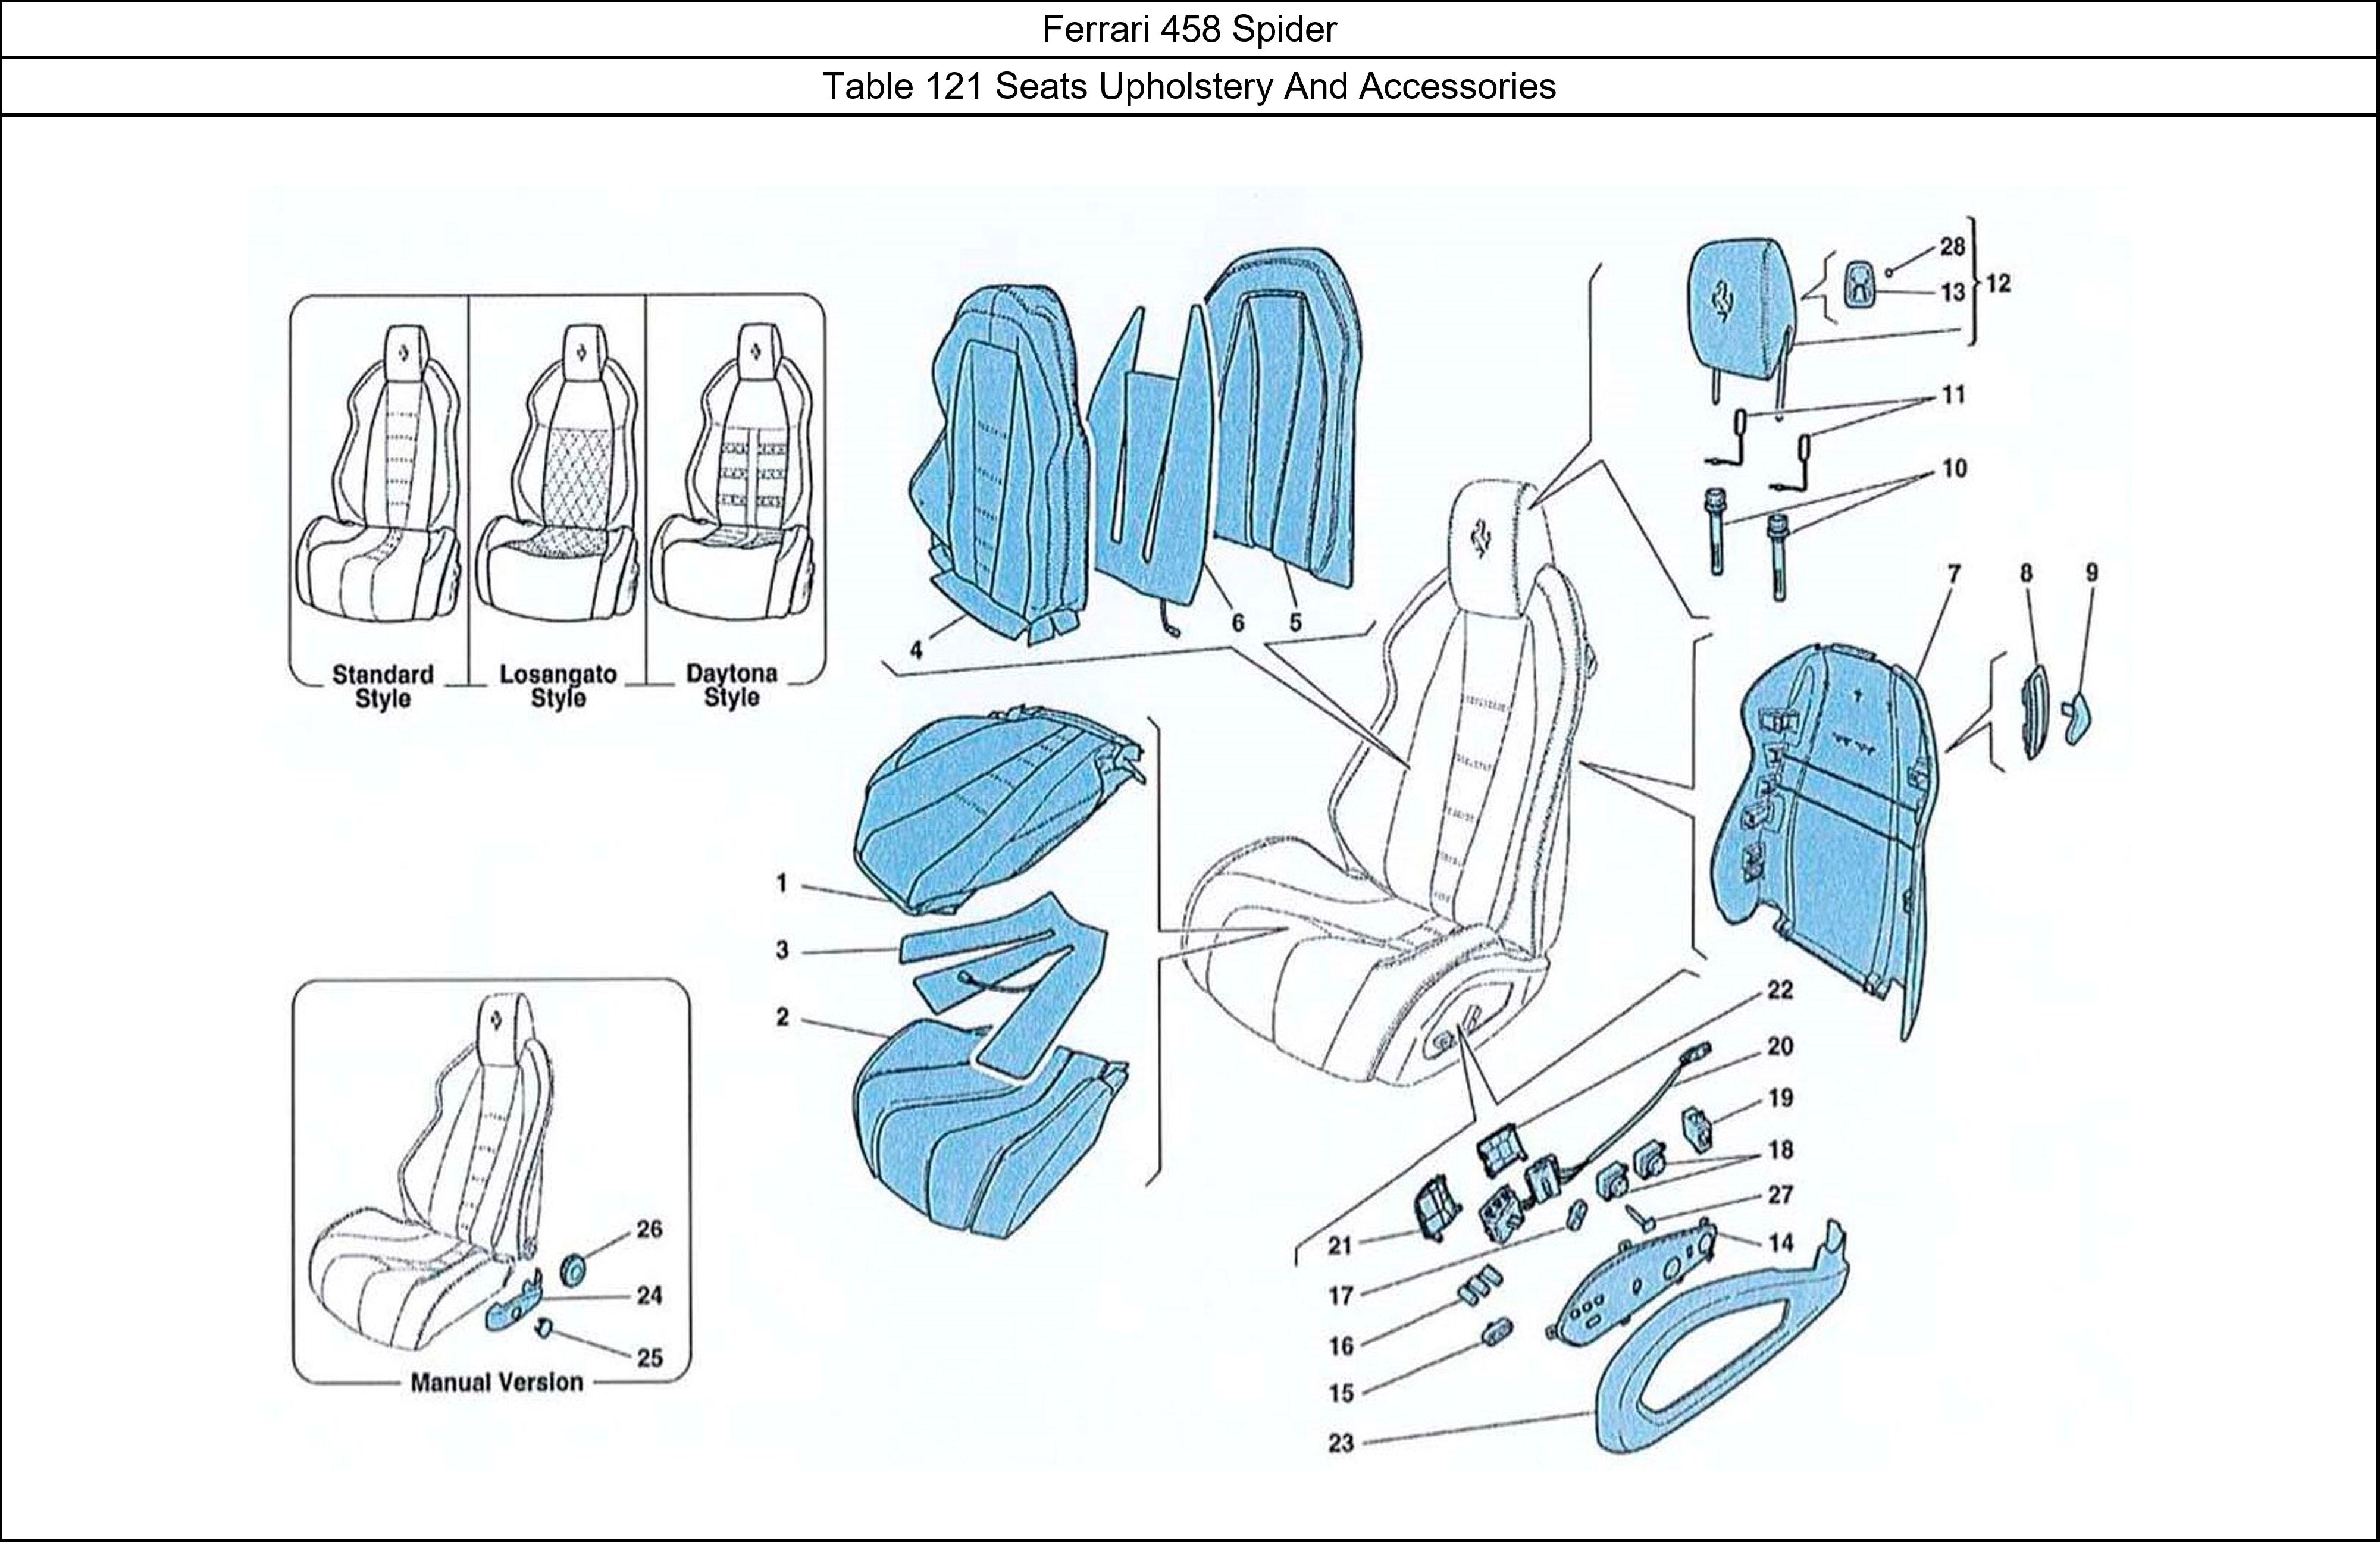 Ferrari Parts Ferrari 458 Spider Table 121 Seats Upholstery And Accessories